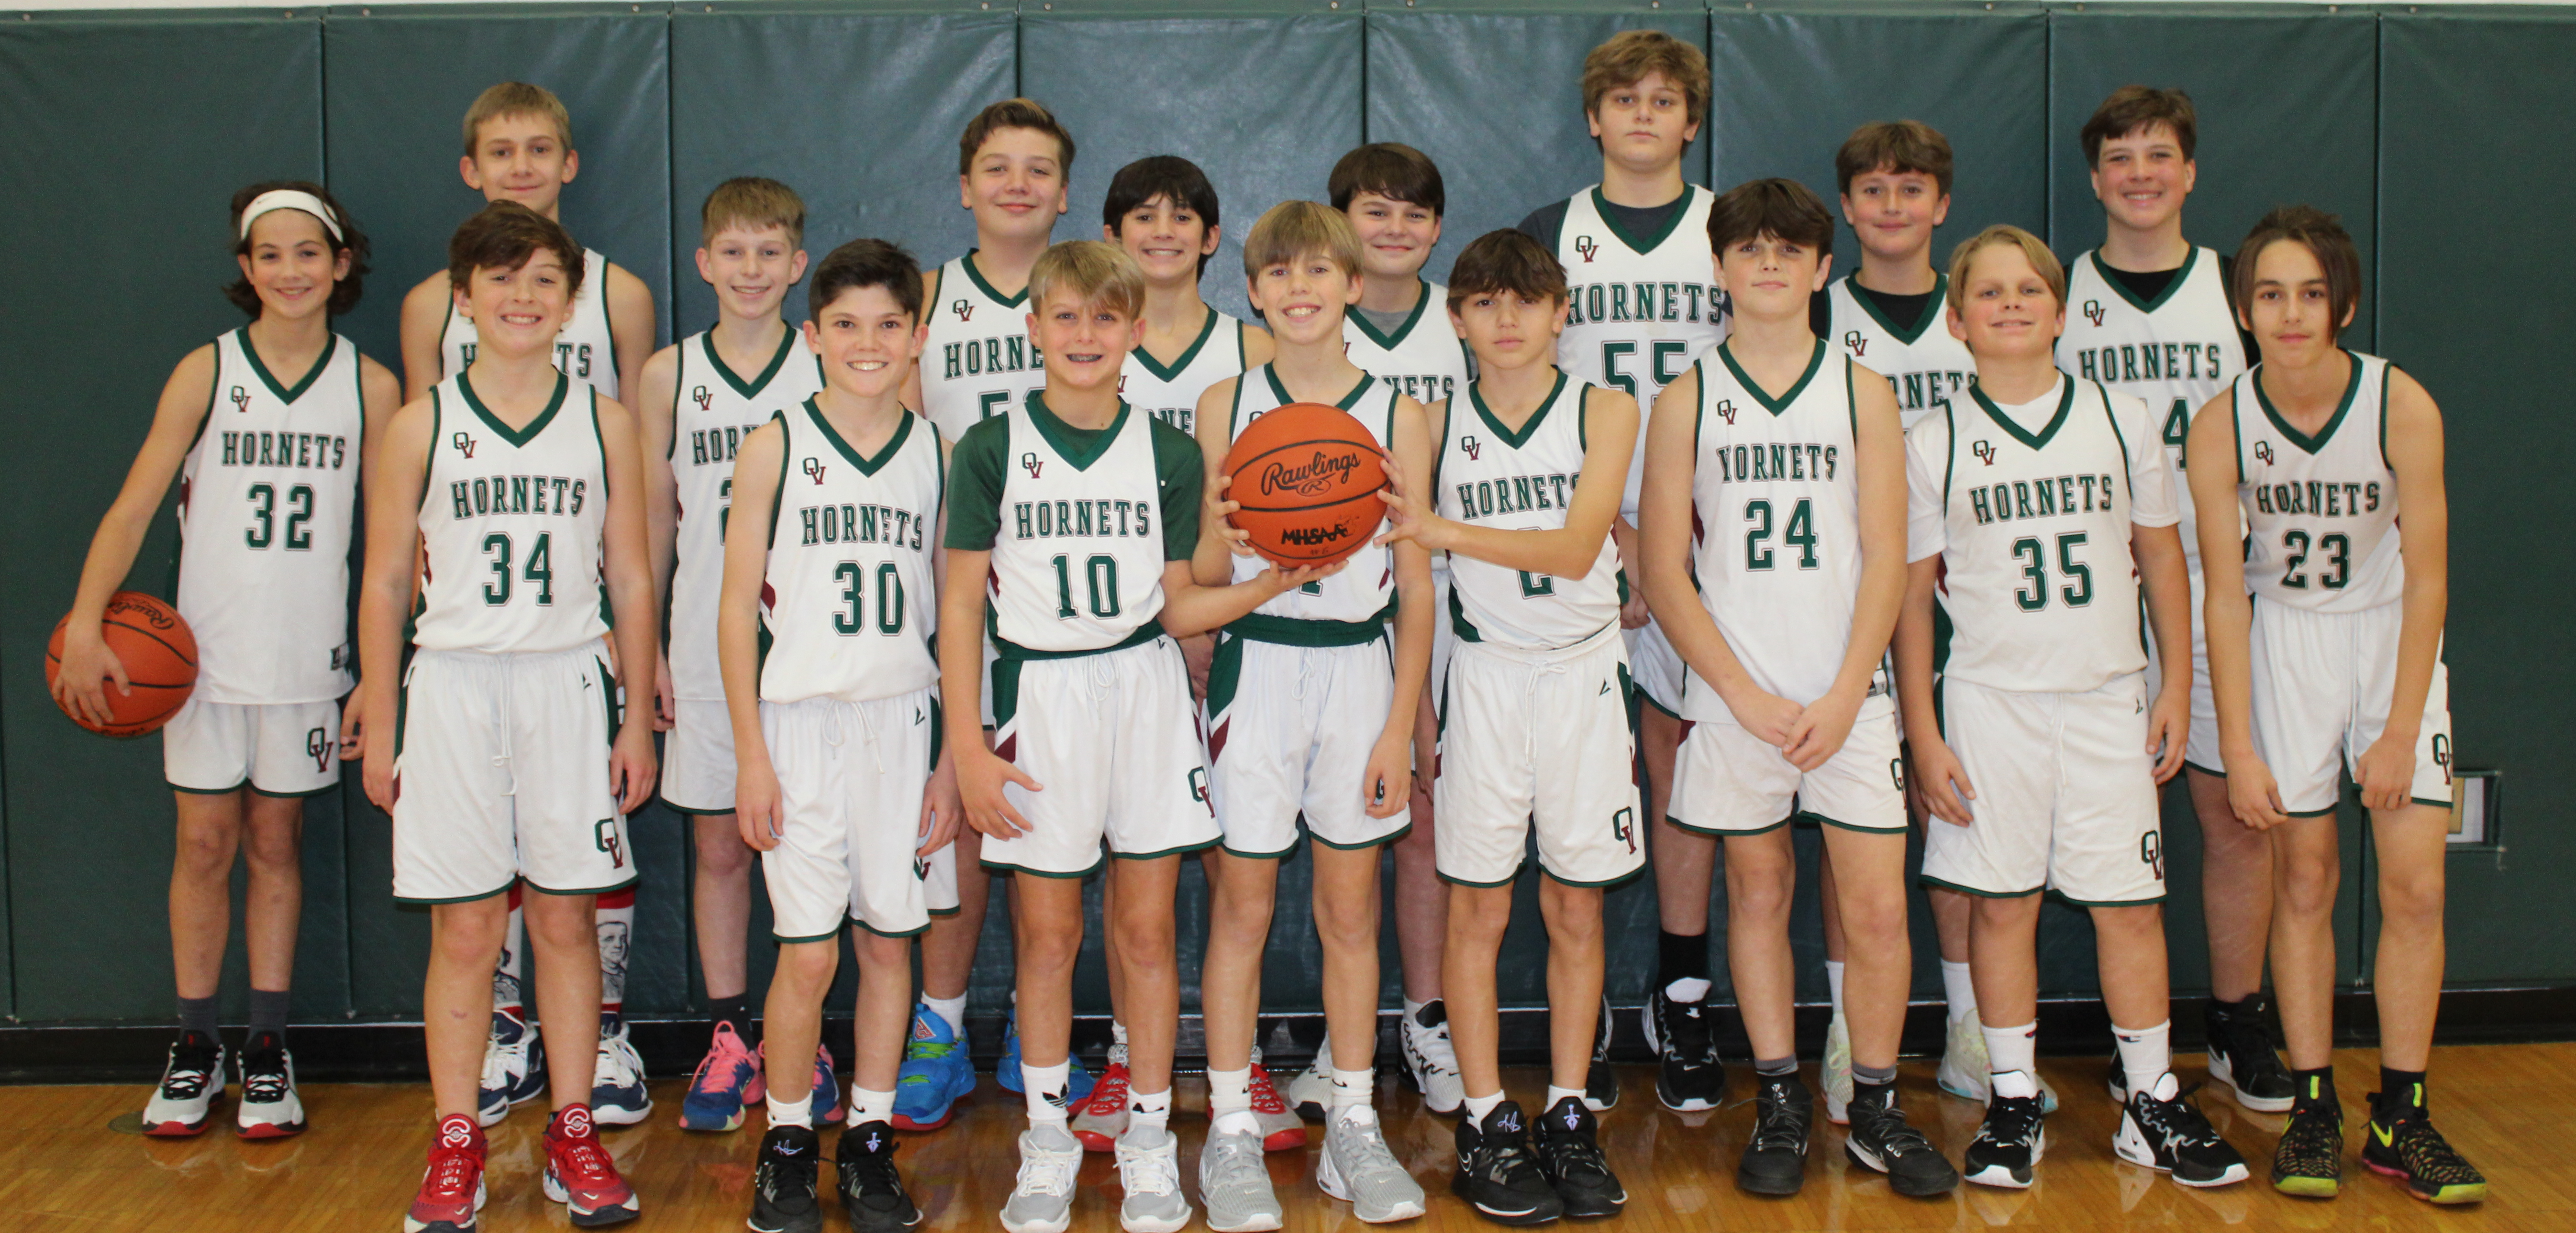 7th grade basketball team